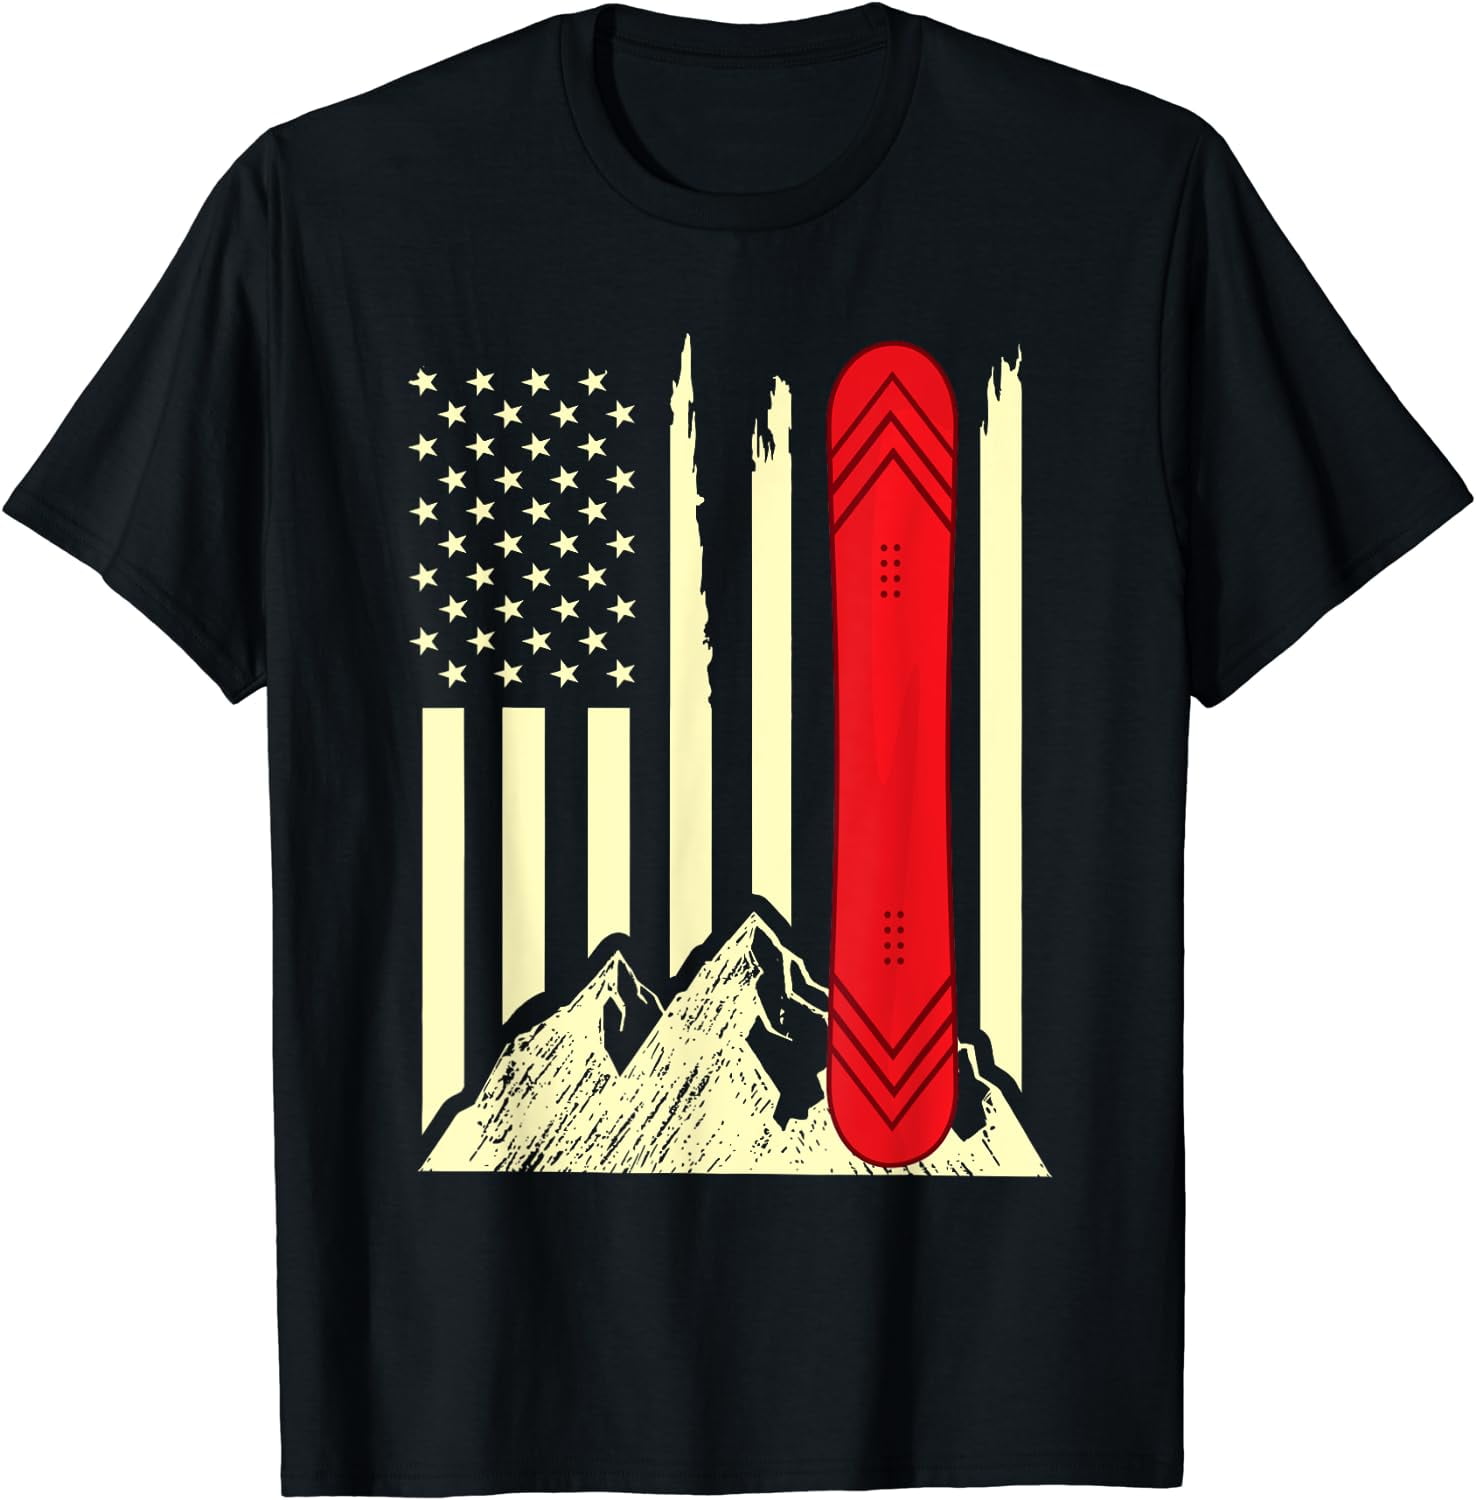 Snowboarding Skiing Snowboard American Flag Snowboarder T-Shirt Black ...